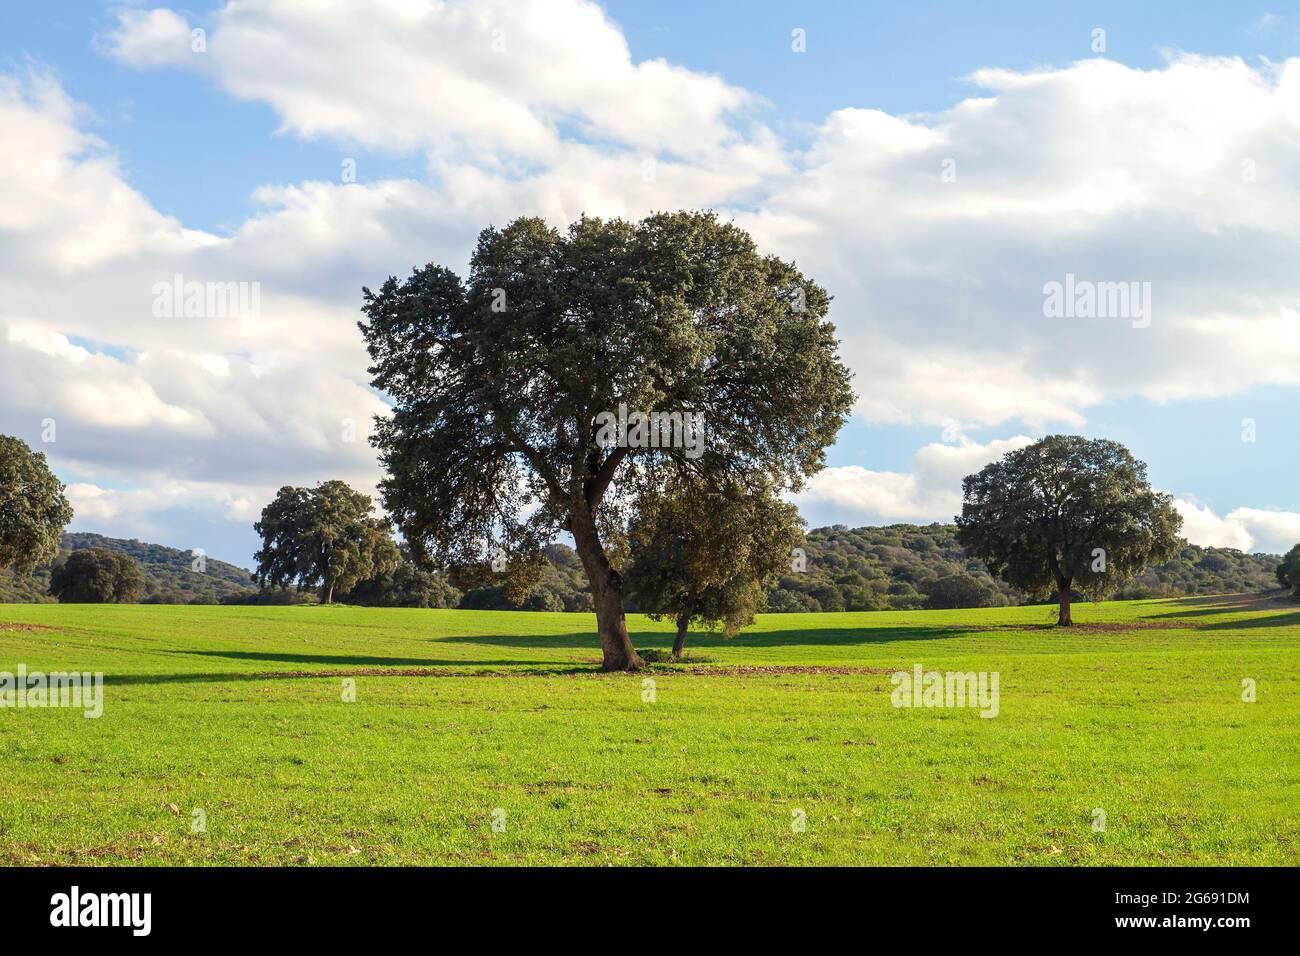 Holm Eichenhain, quercus ilex Bäume in grünen Rasen Landschaft Stockfoto